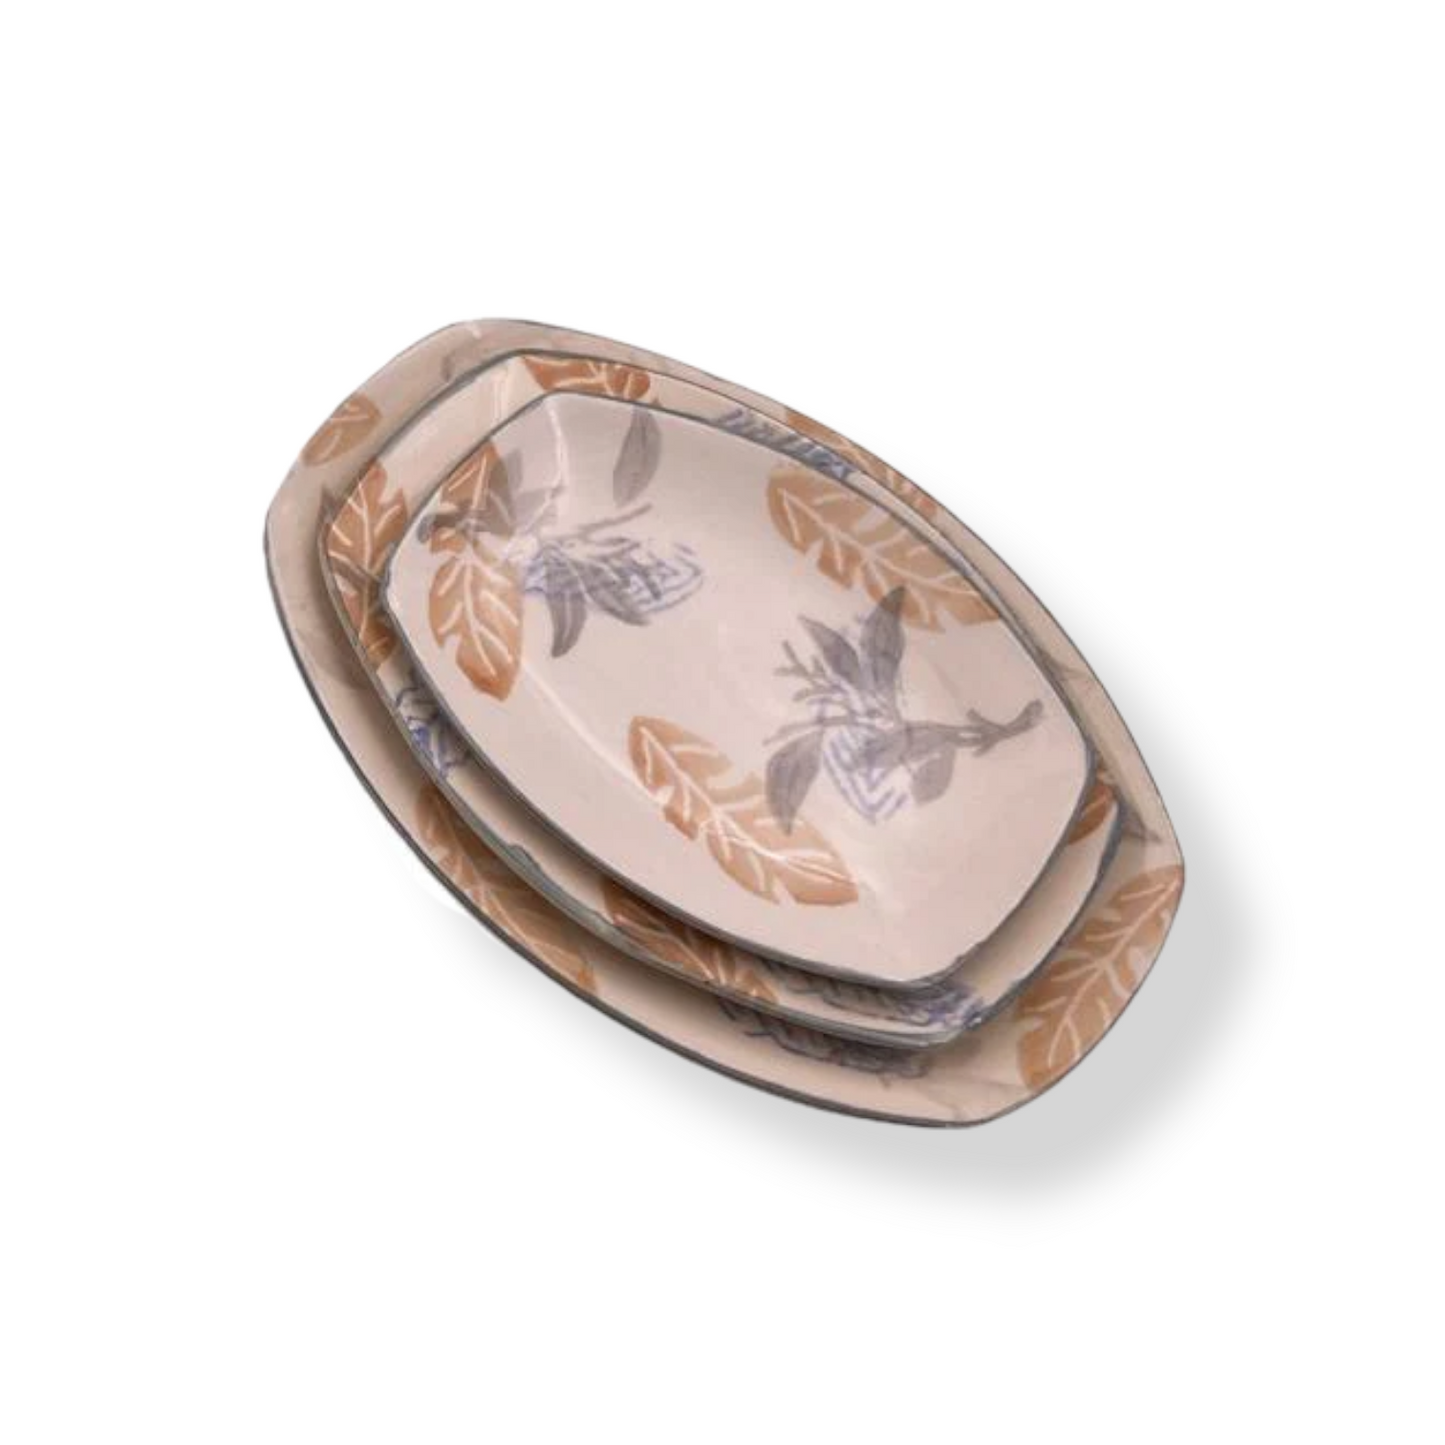 Decorated Ceramic Oval Plates Set of 3 - Lunaz Shop